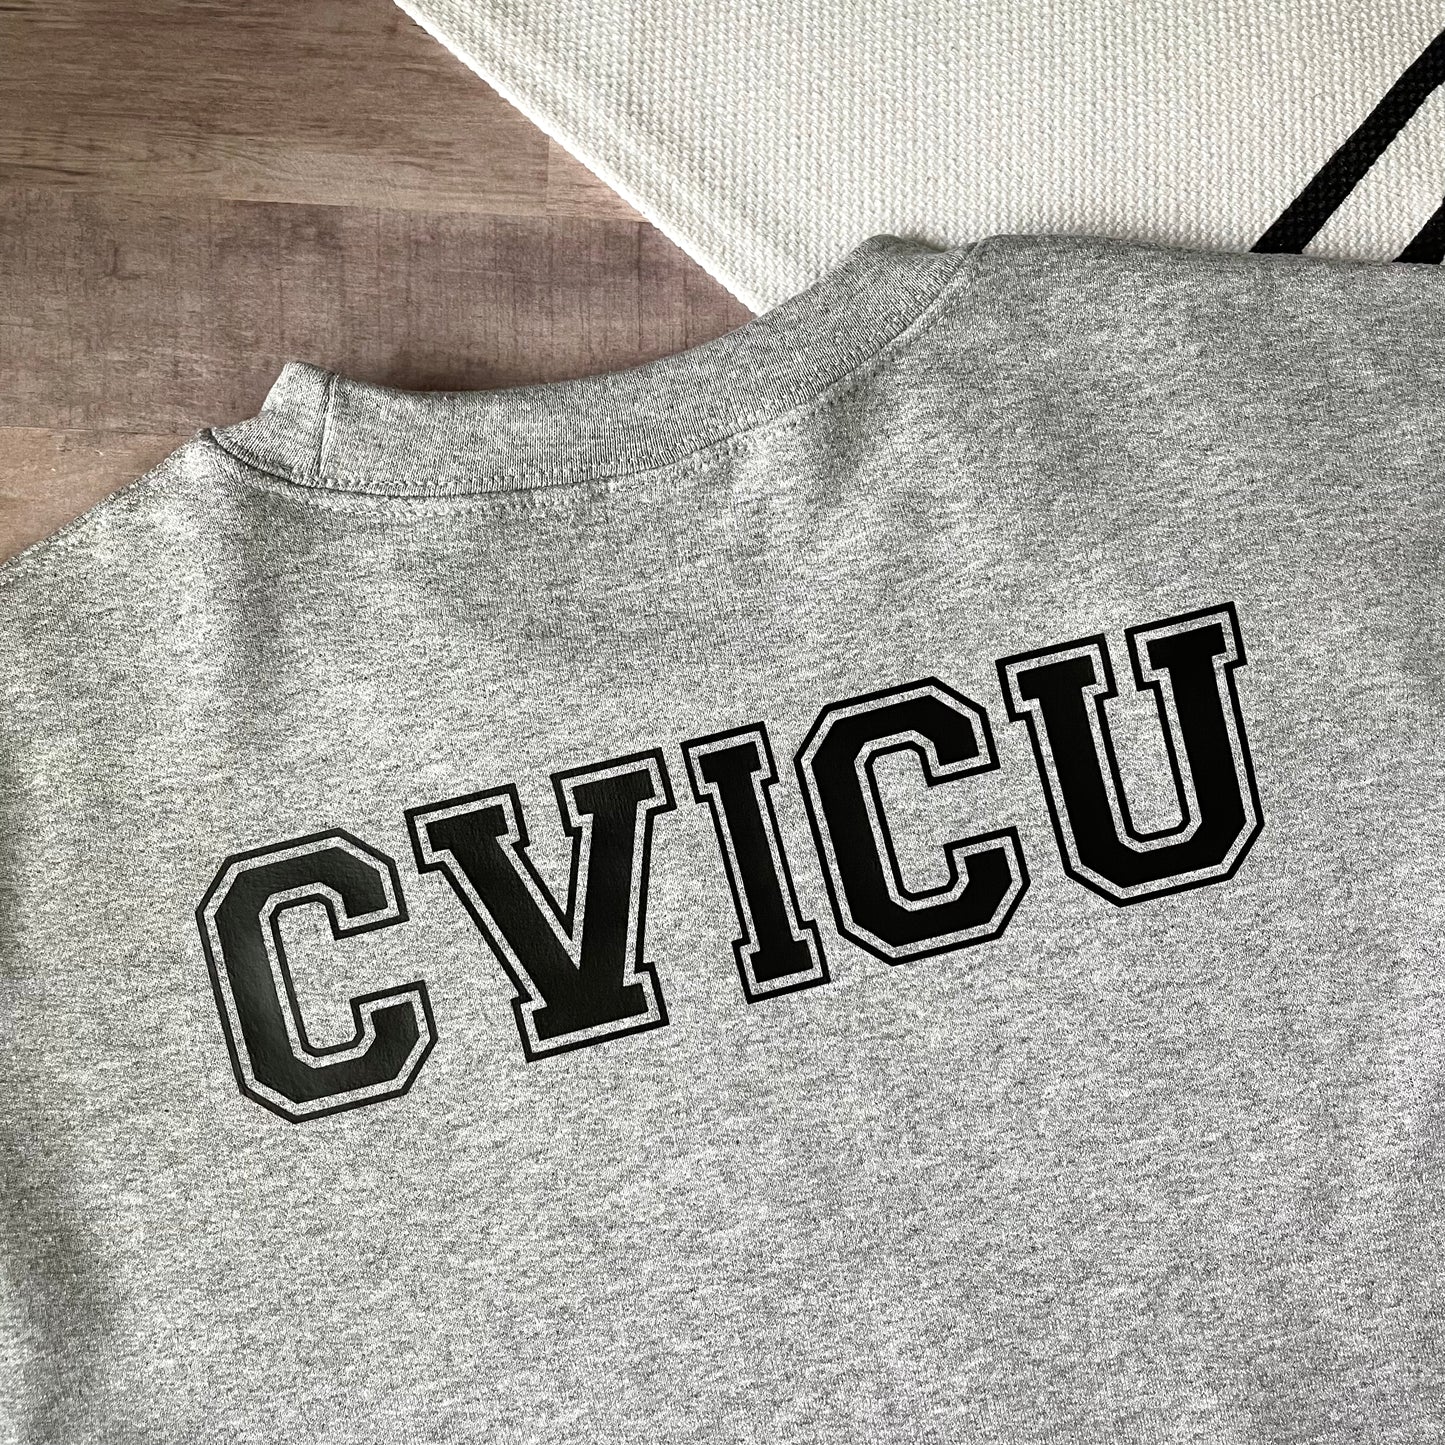 Personalized CVICU Sweatshirt